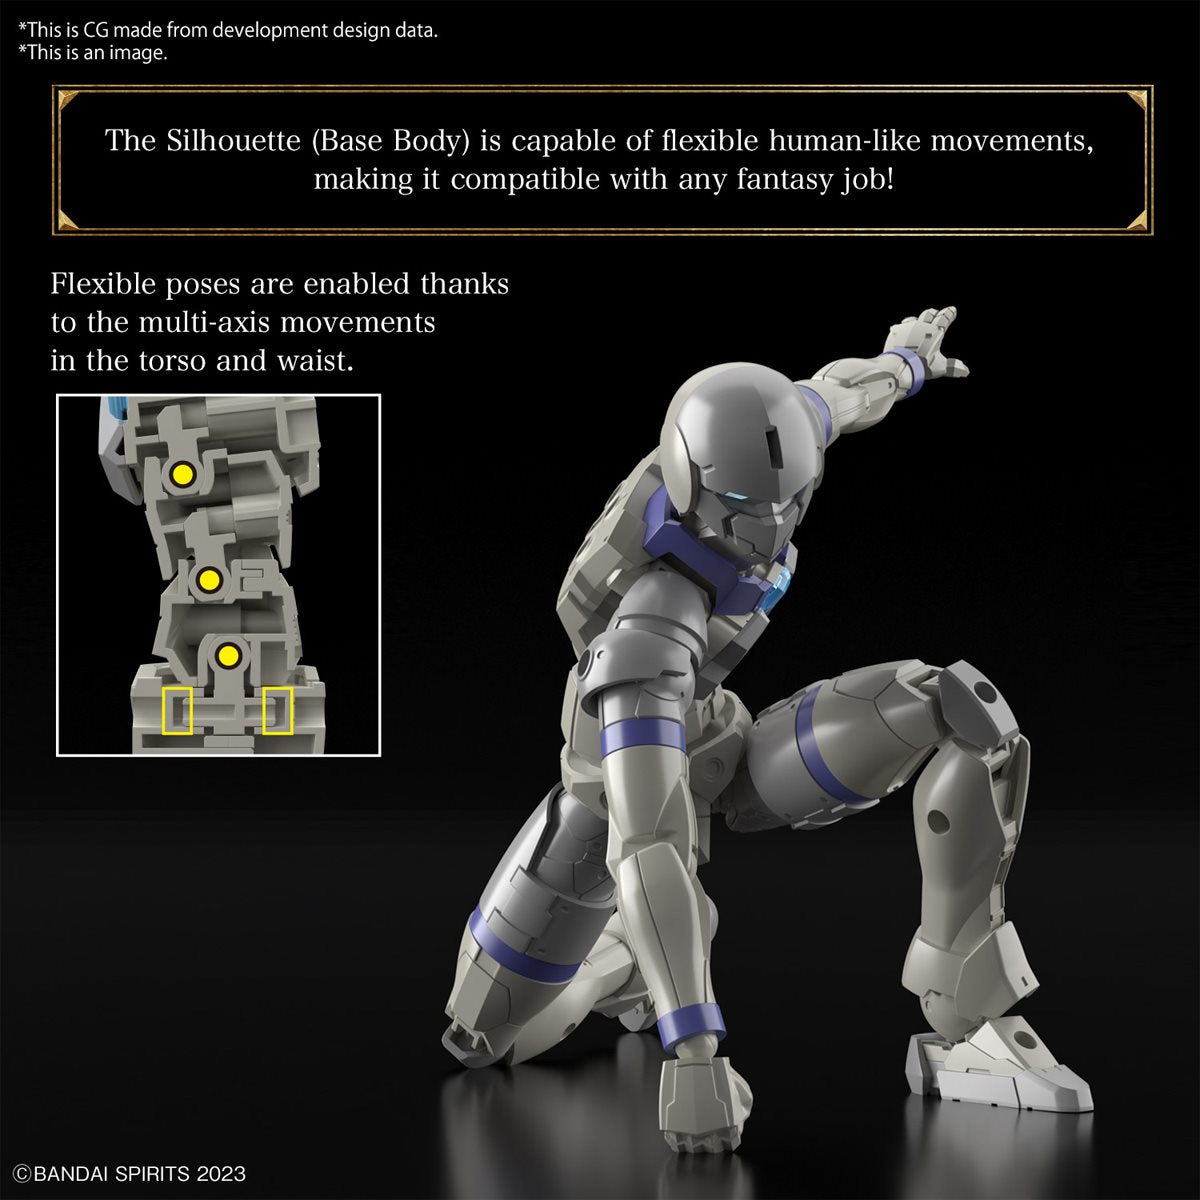 Bandai Hobby Gunpla Model Kit: 30 Minutes Fantasy - Liber Knight Kit De Plastico